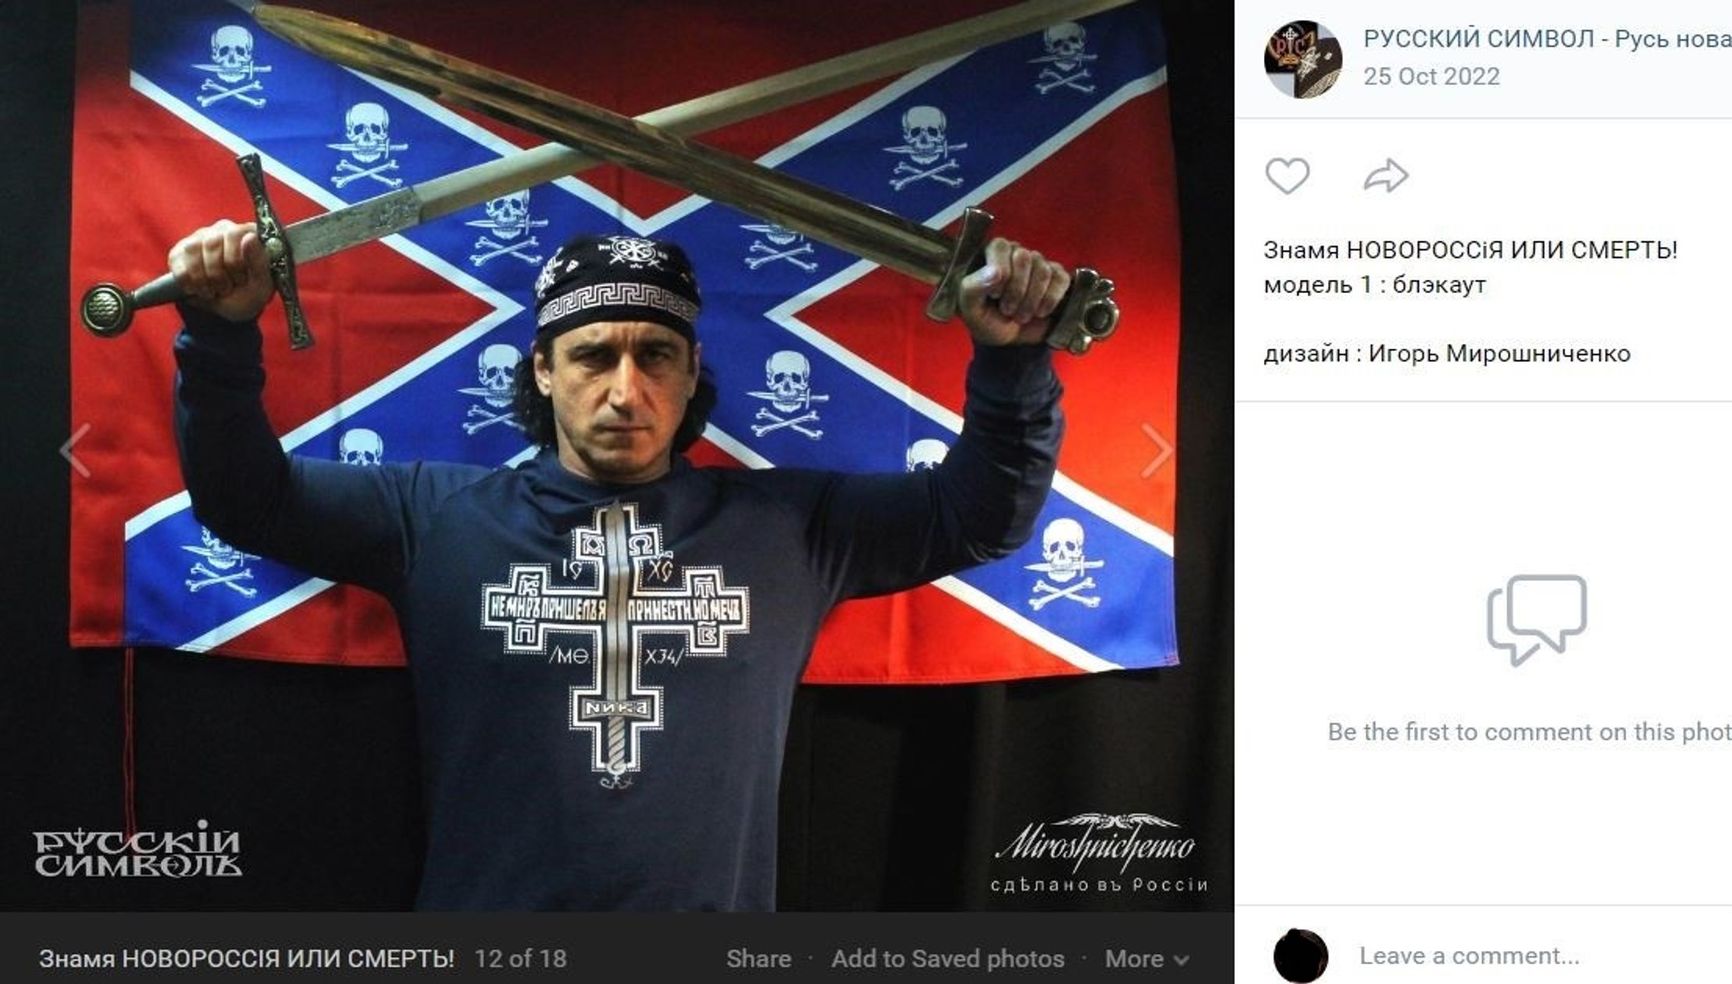 Grunskii wearing Russian symbol design studio apparel. The slogan is “Novorossiya or Death”. 